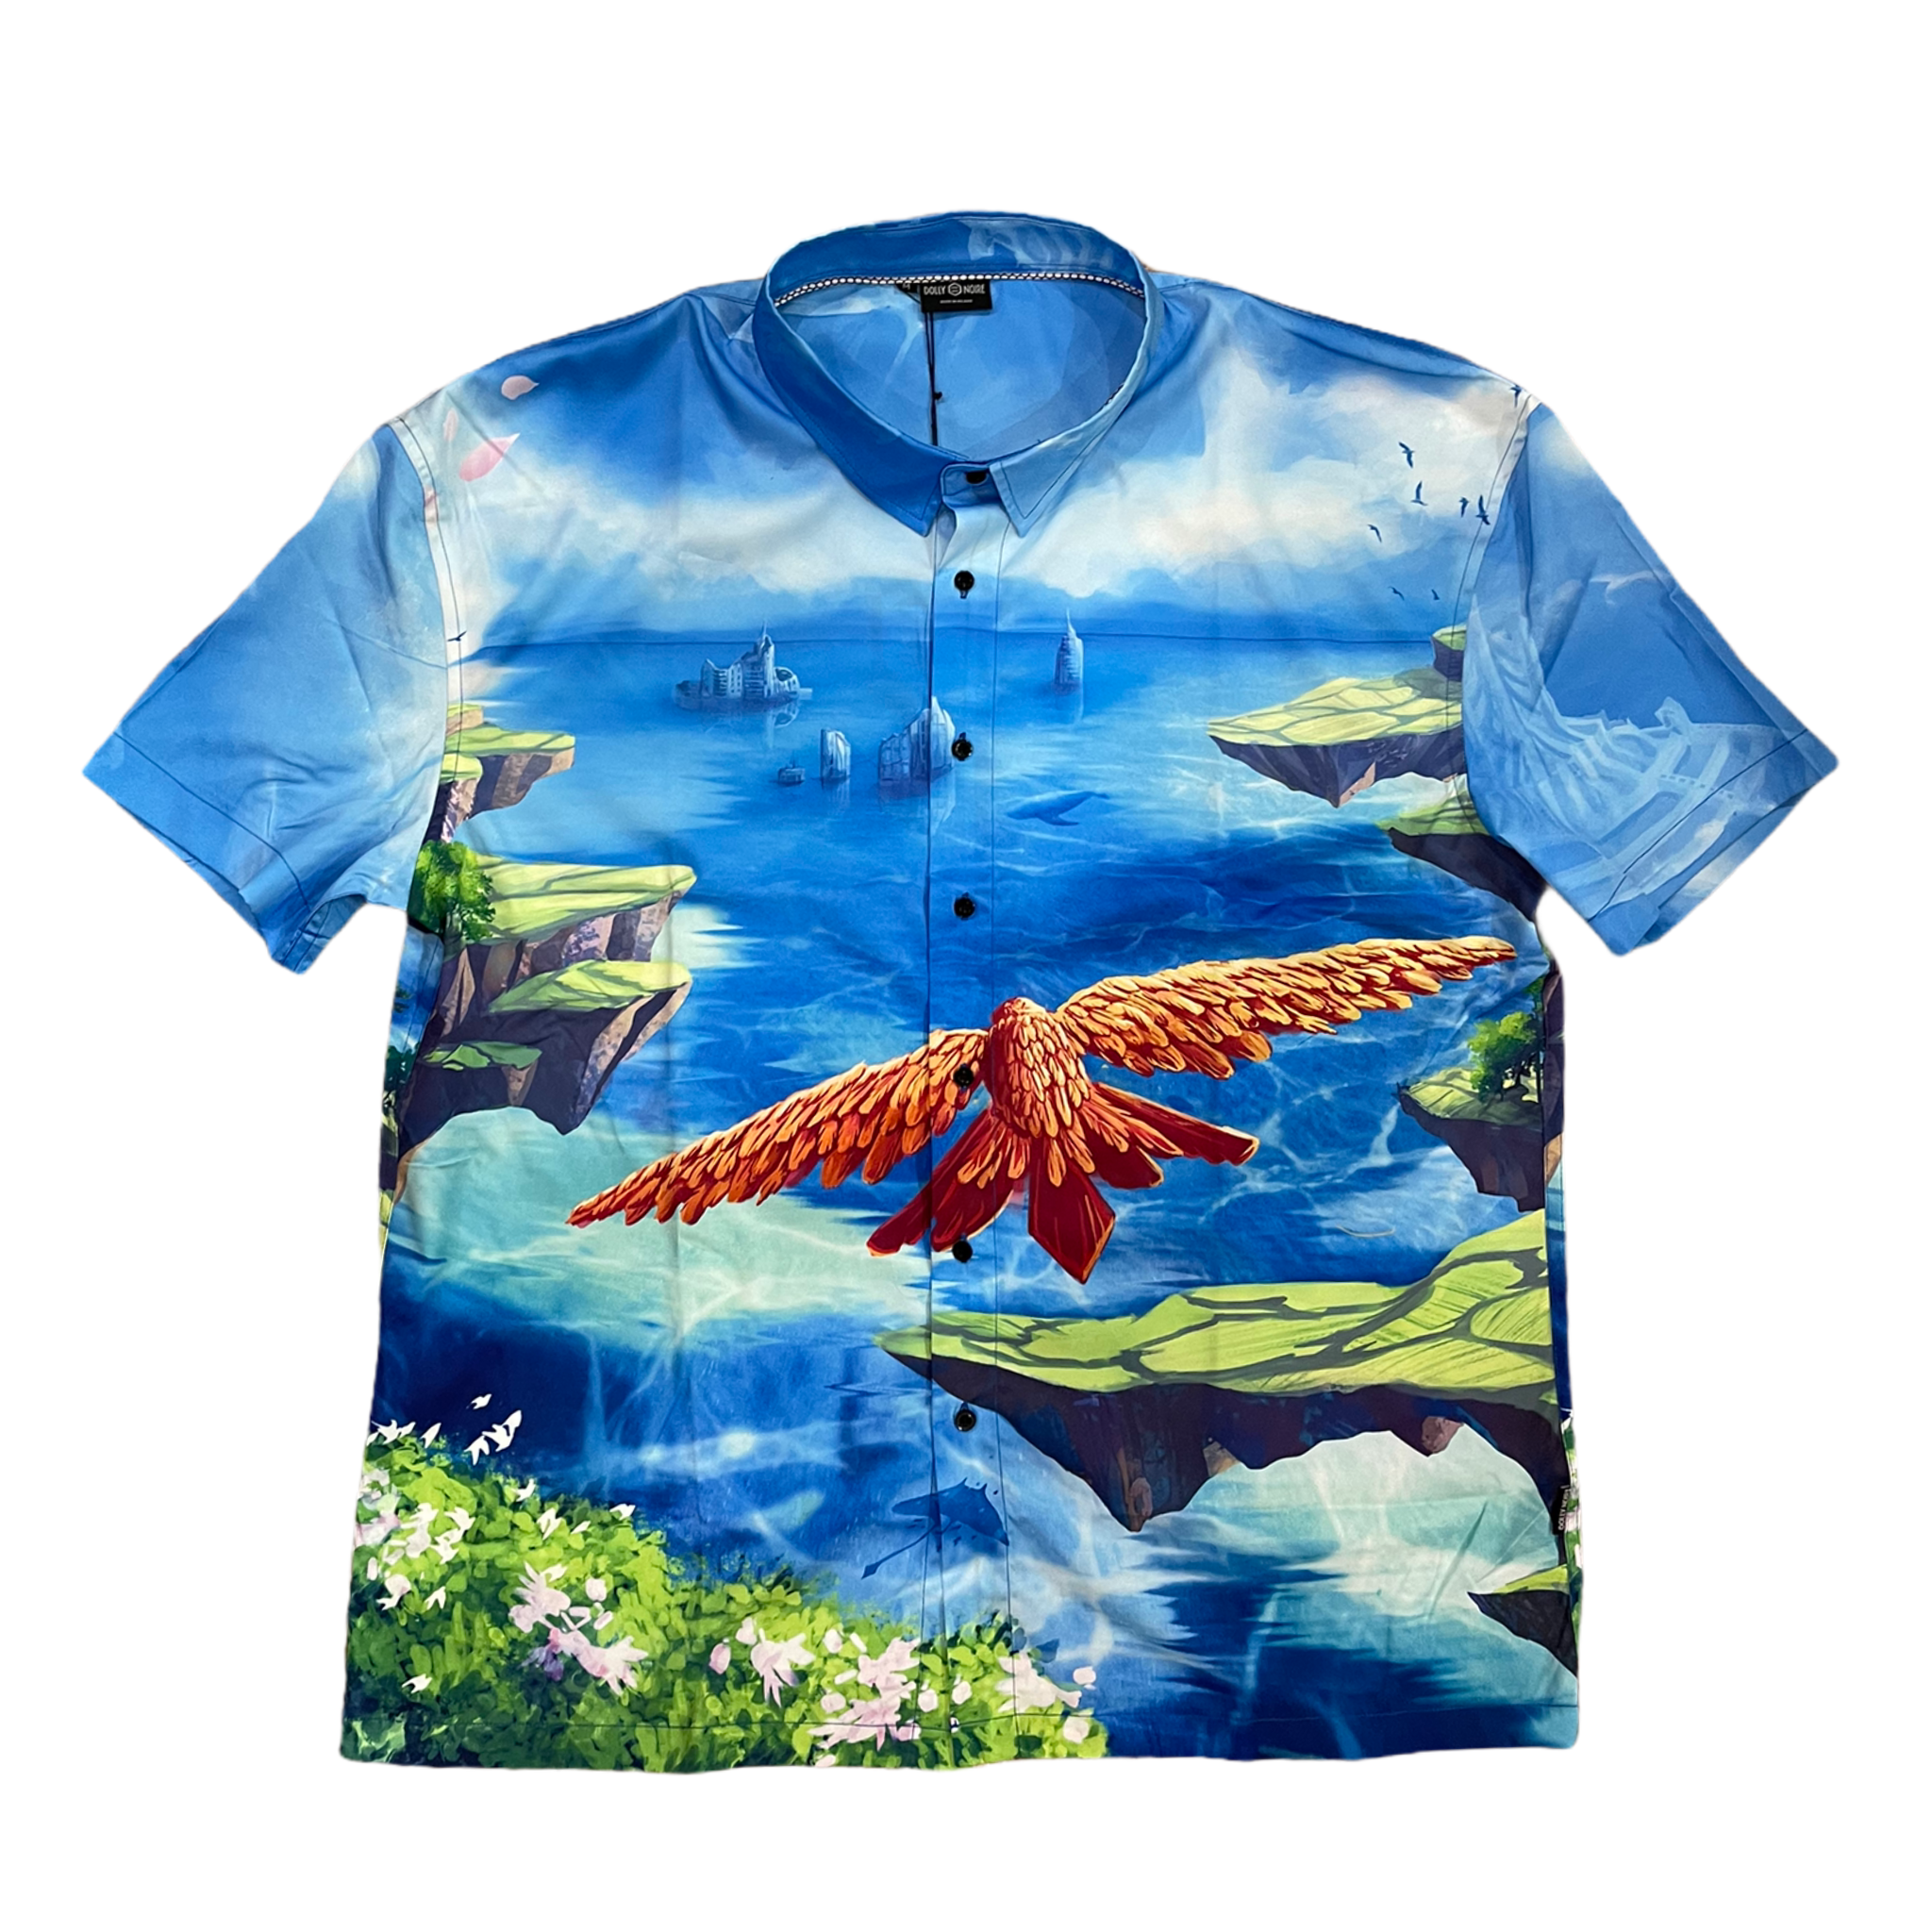 DOLLY NOIRE - Dreamland Shirt